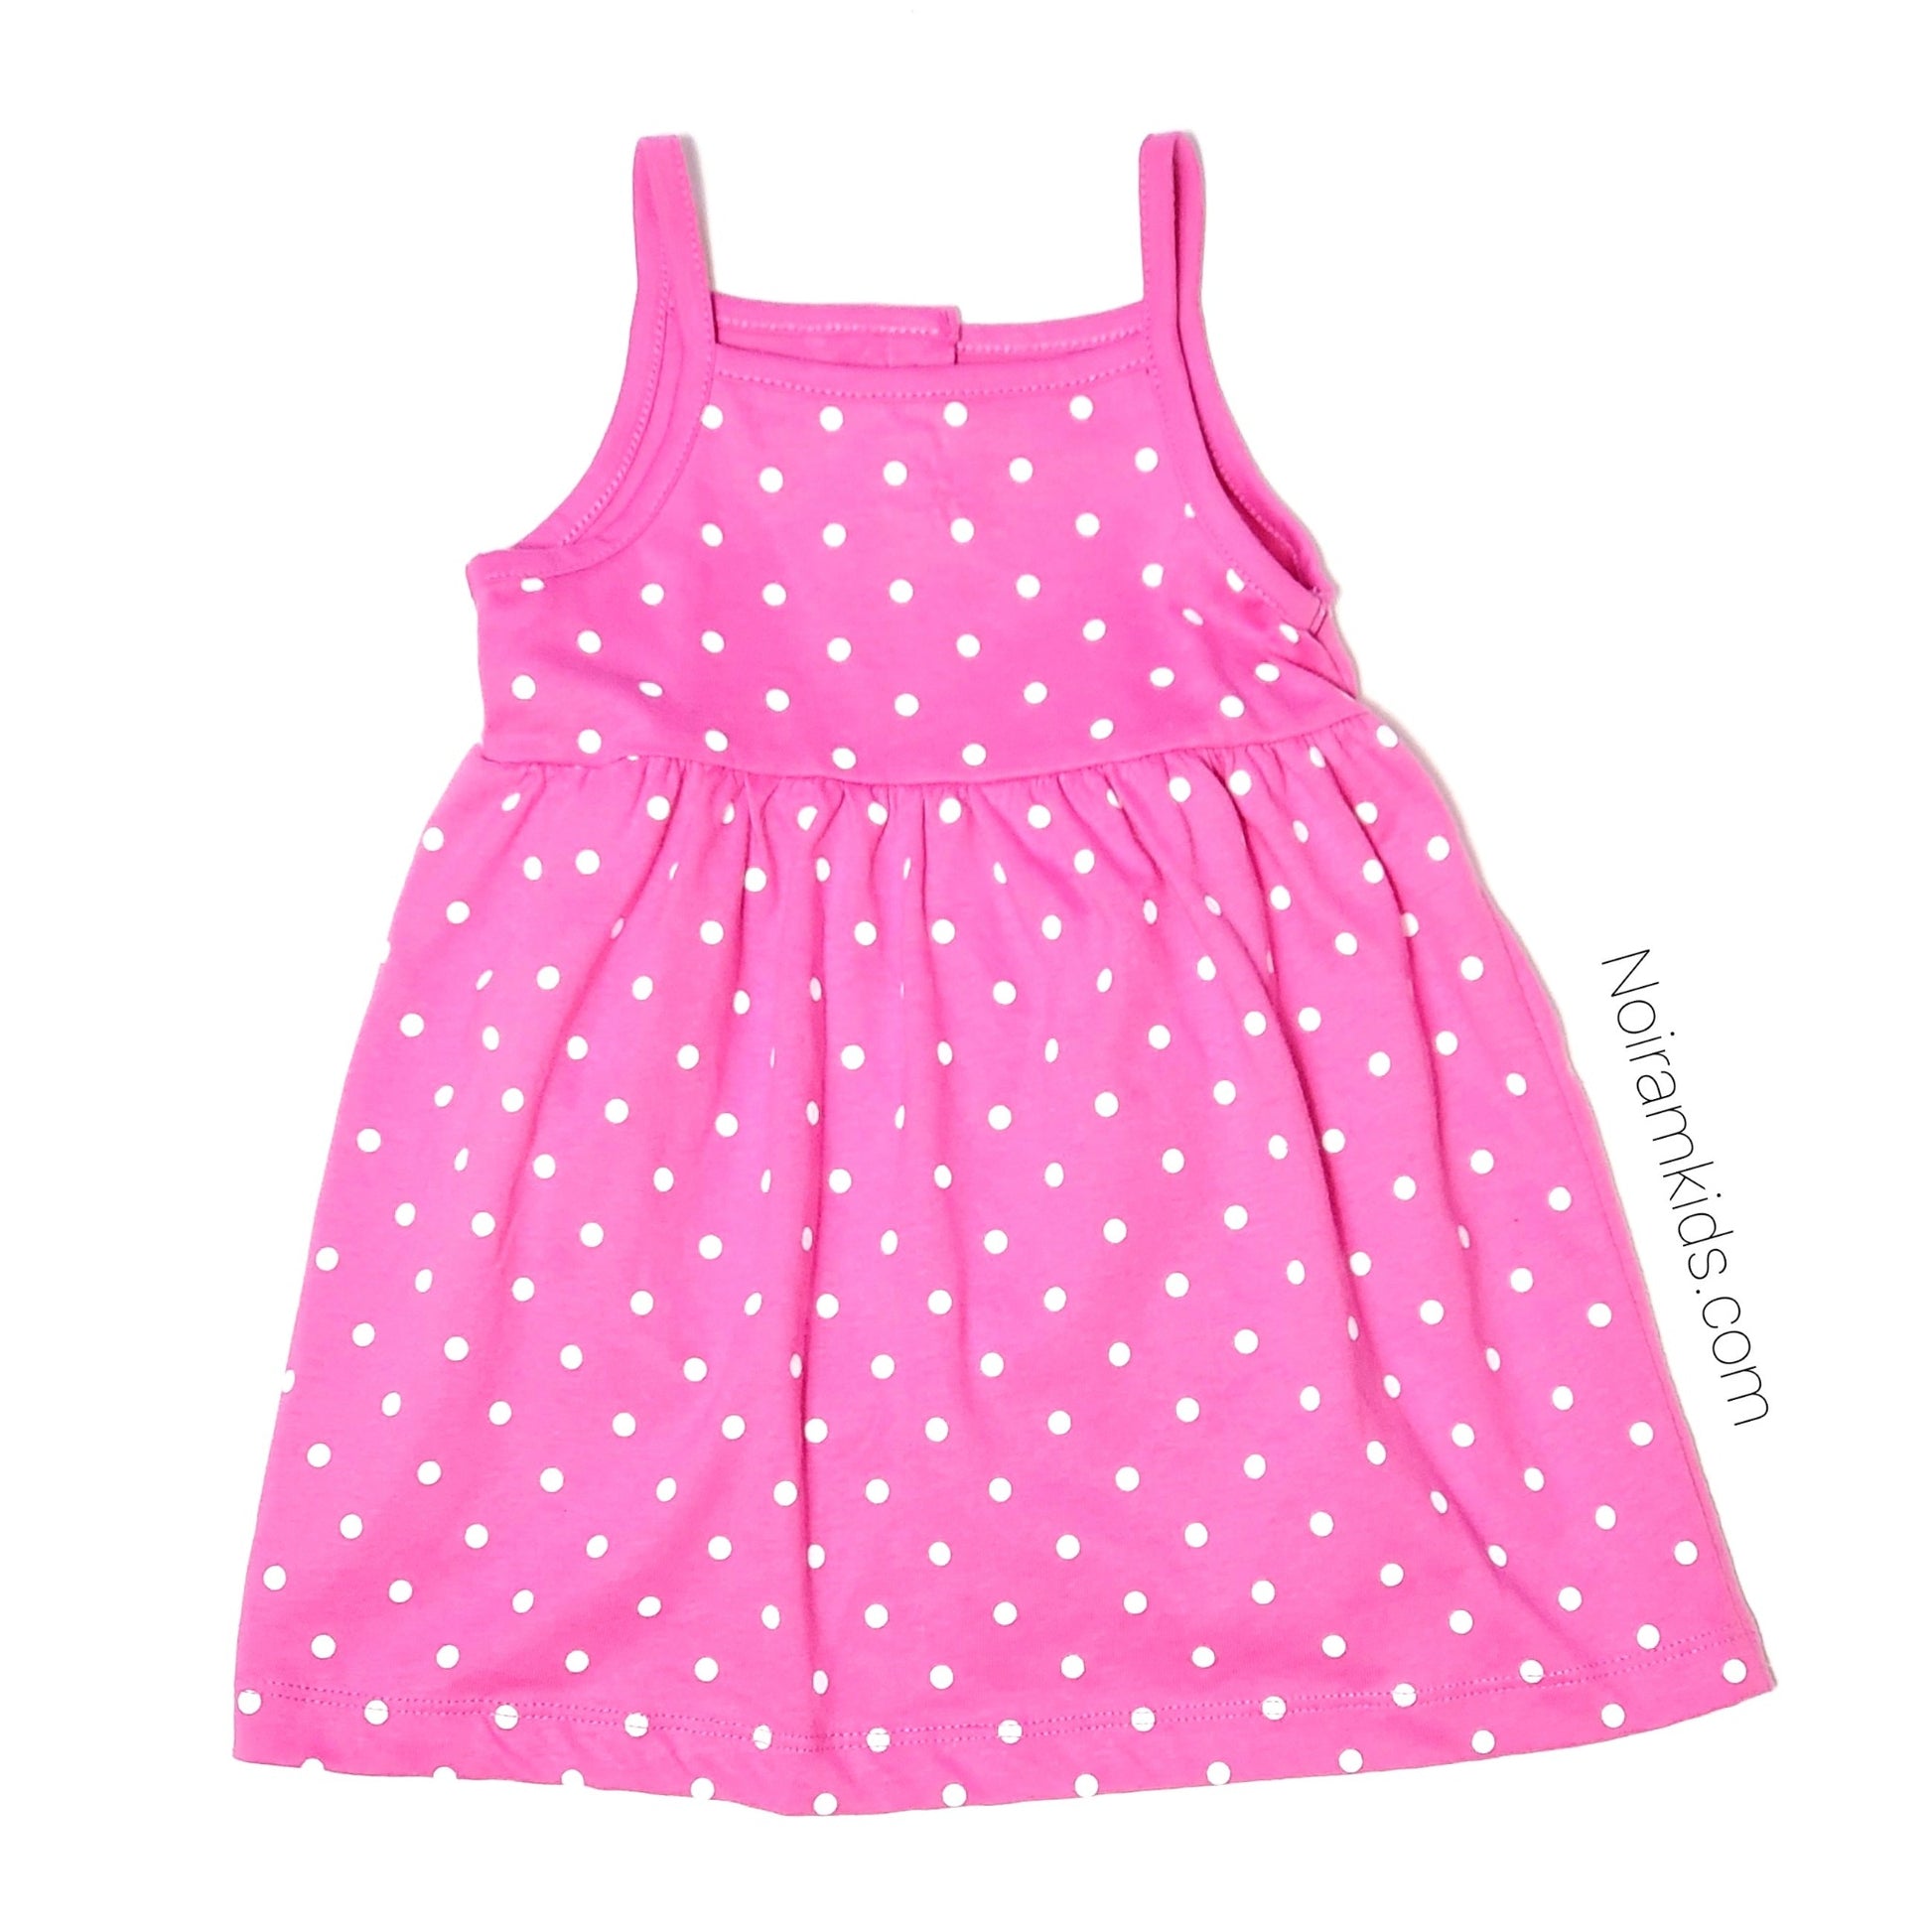 Carters Pink White Polka Dot Girls Dress 12M, back